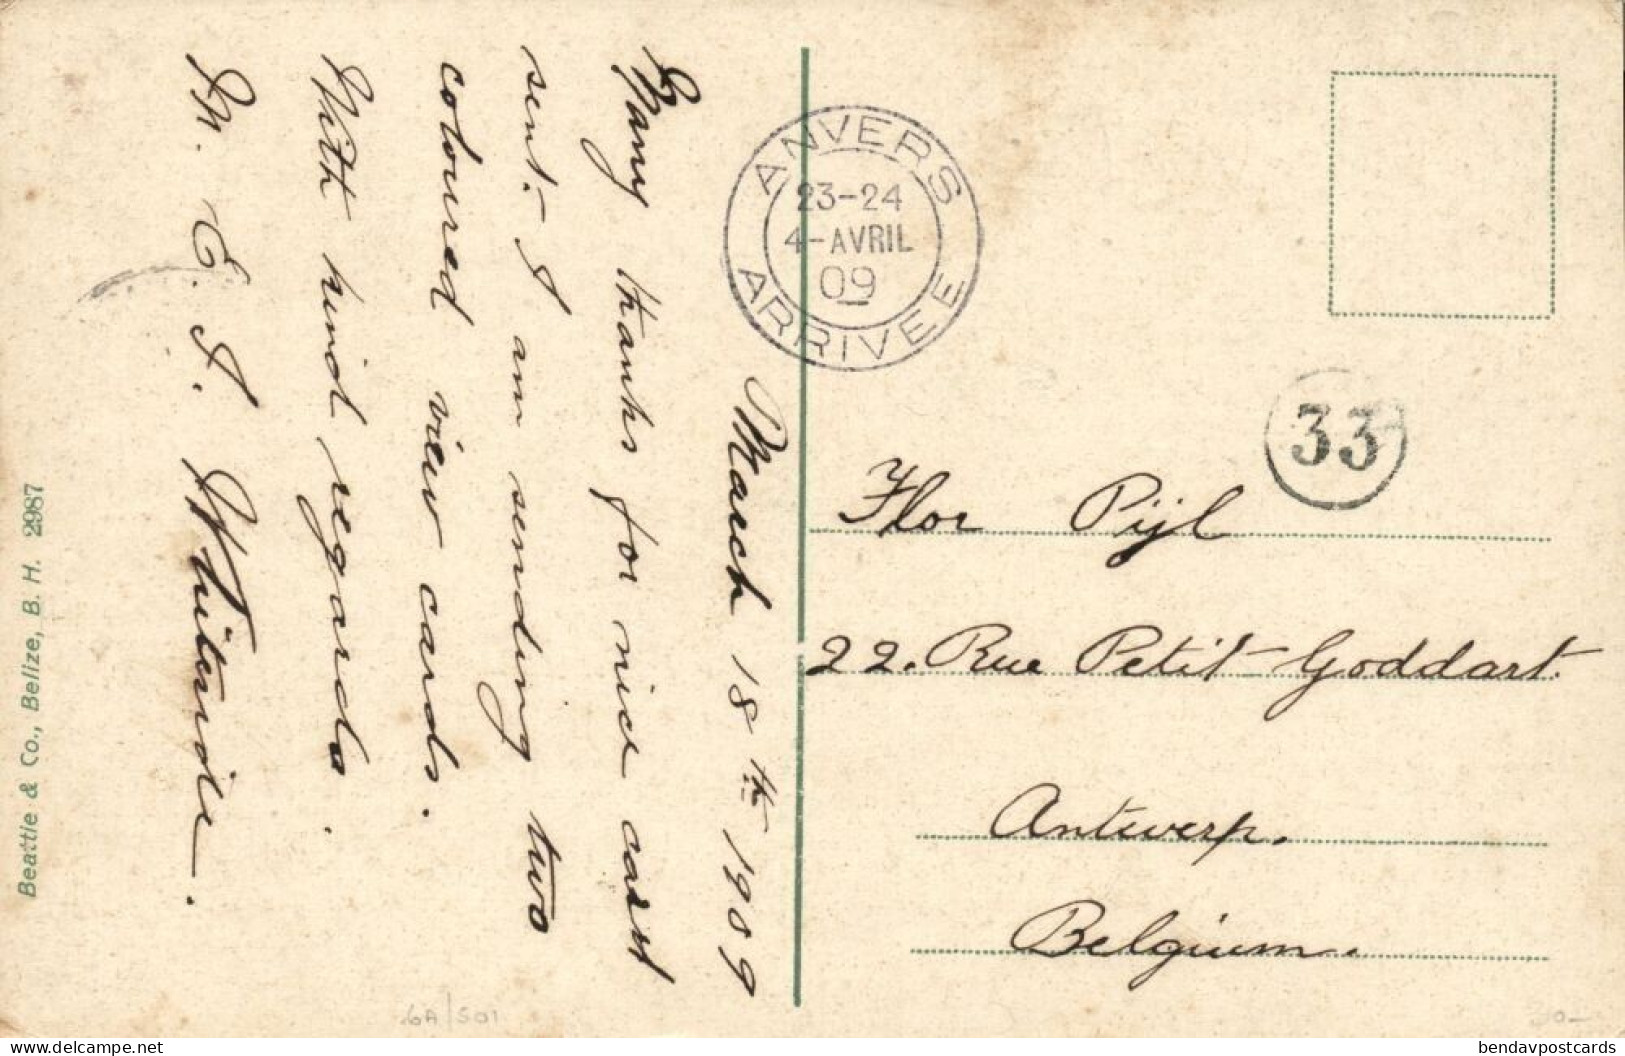 British Honduras, BELIZE, East Indian Coolie Hut (1909) Postcard - Belice